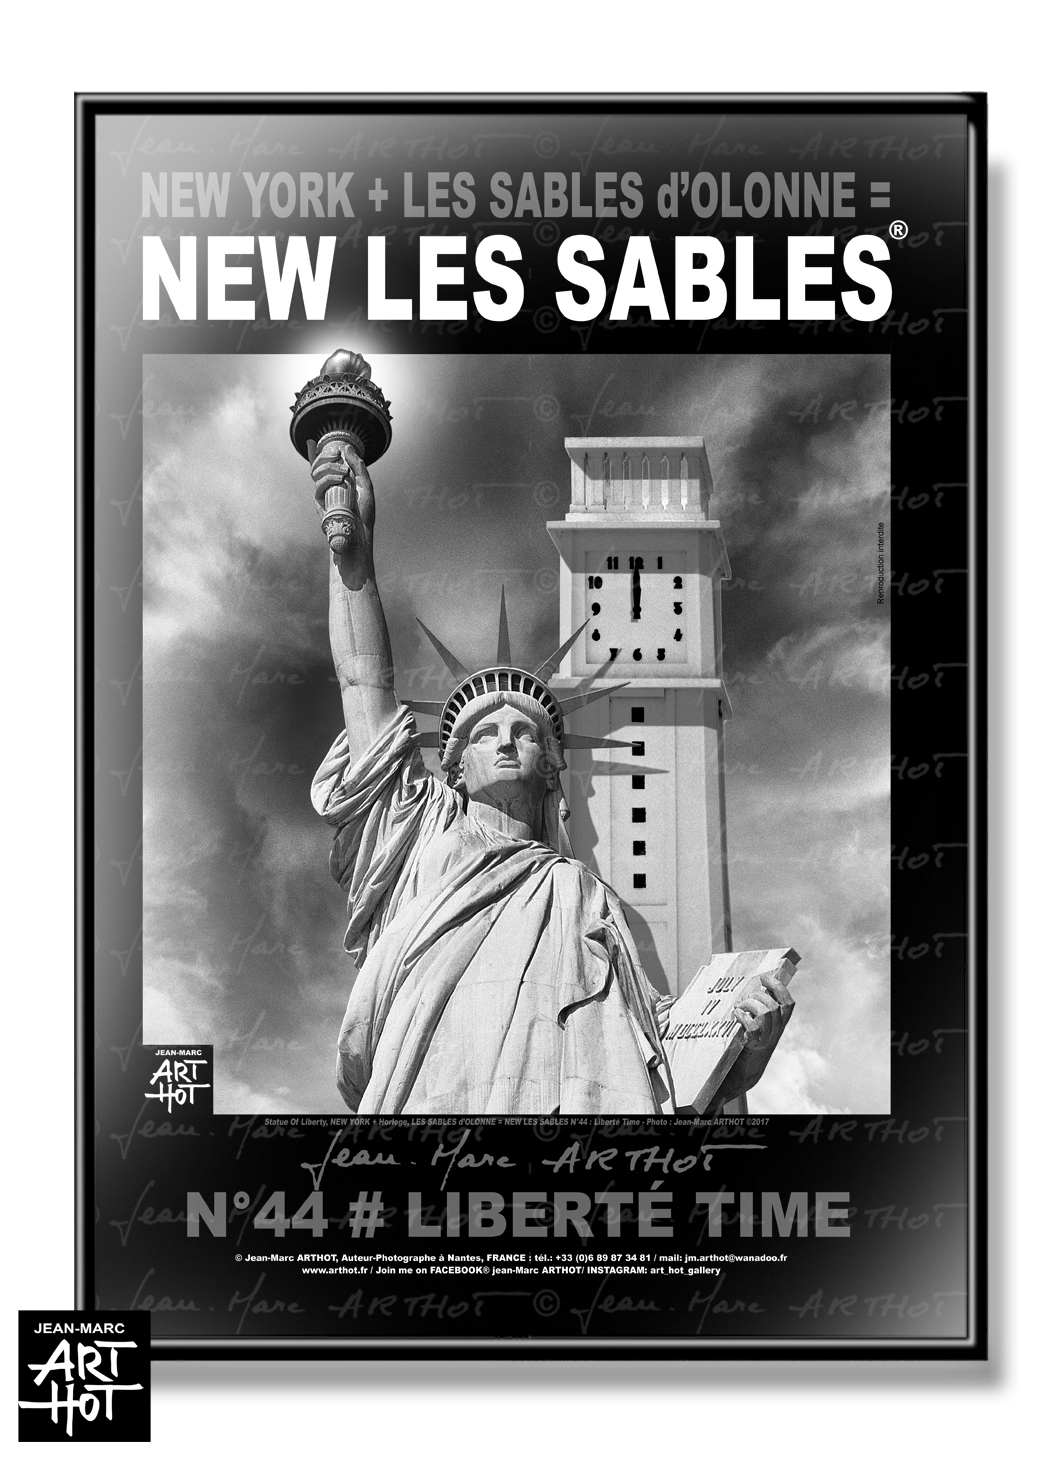 arthot-photo-art-b&amp;w-new-york-vendee-sables-olonne-newlessables-044-liberty-horloge-AFFICHE